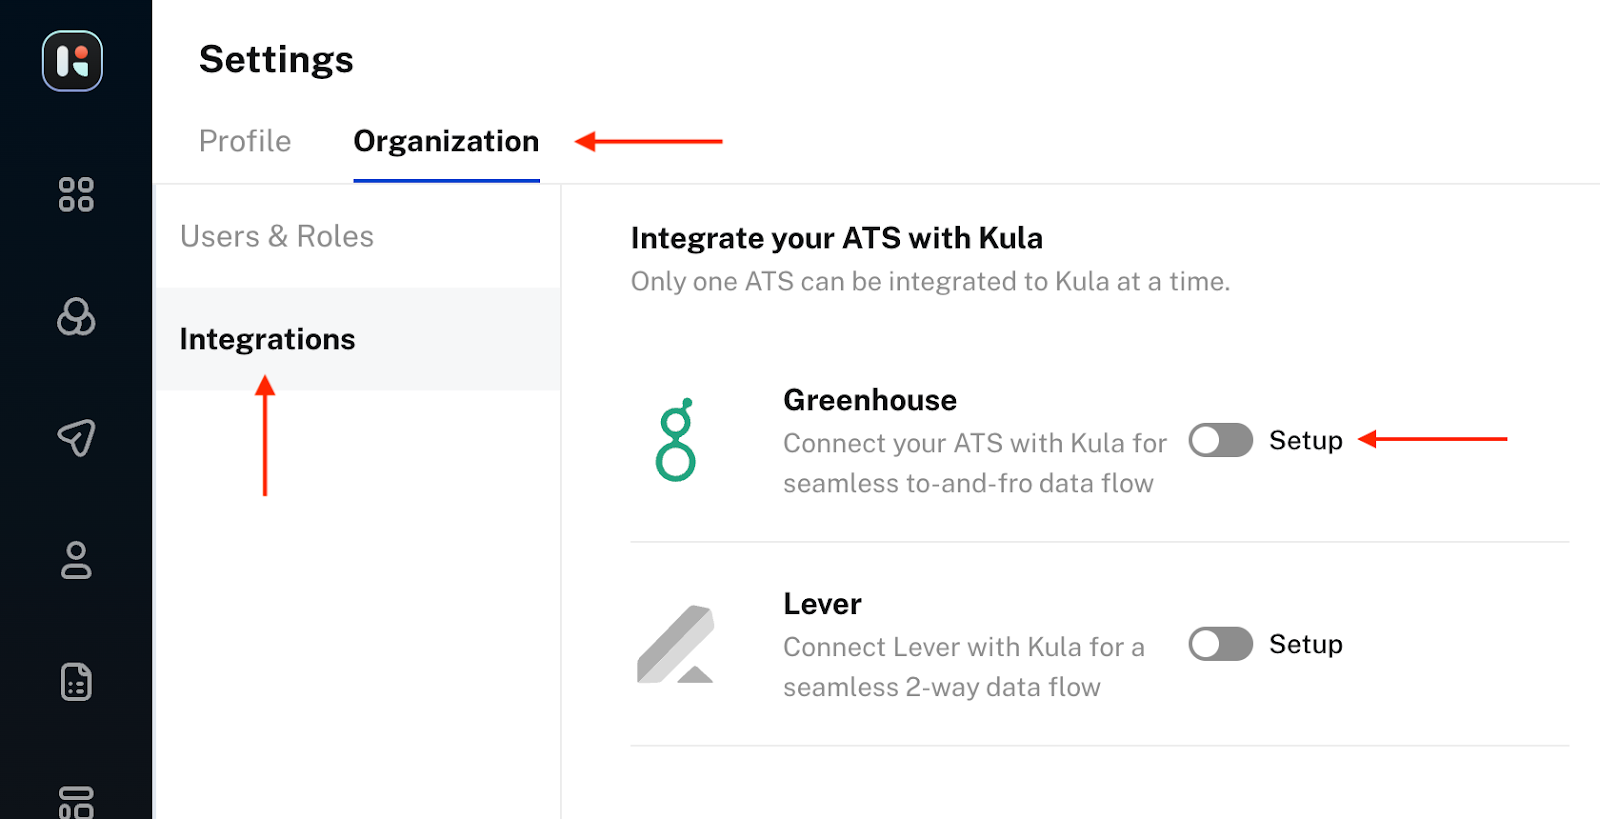 The Kula platform shows the Greenhouse integration with a Setup toggle beside it